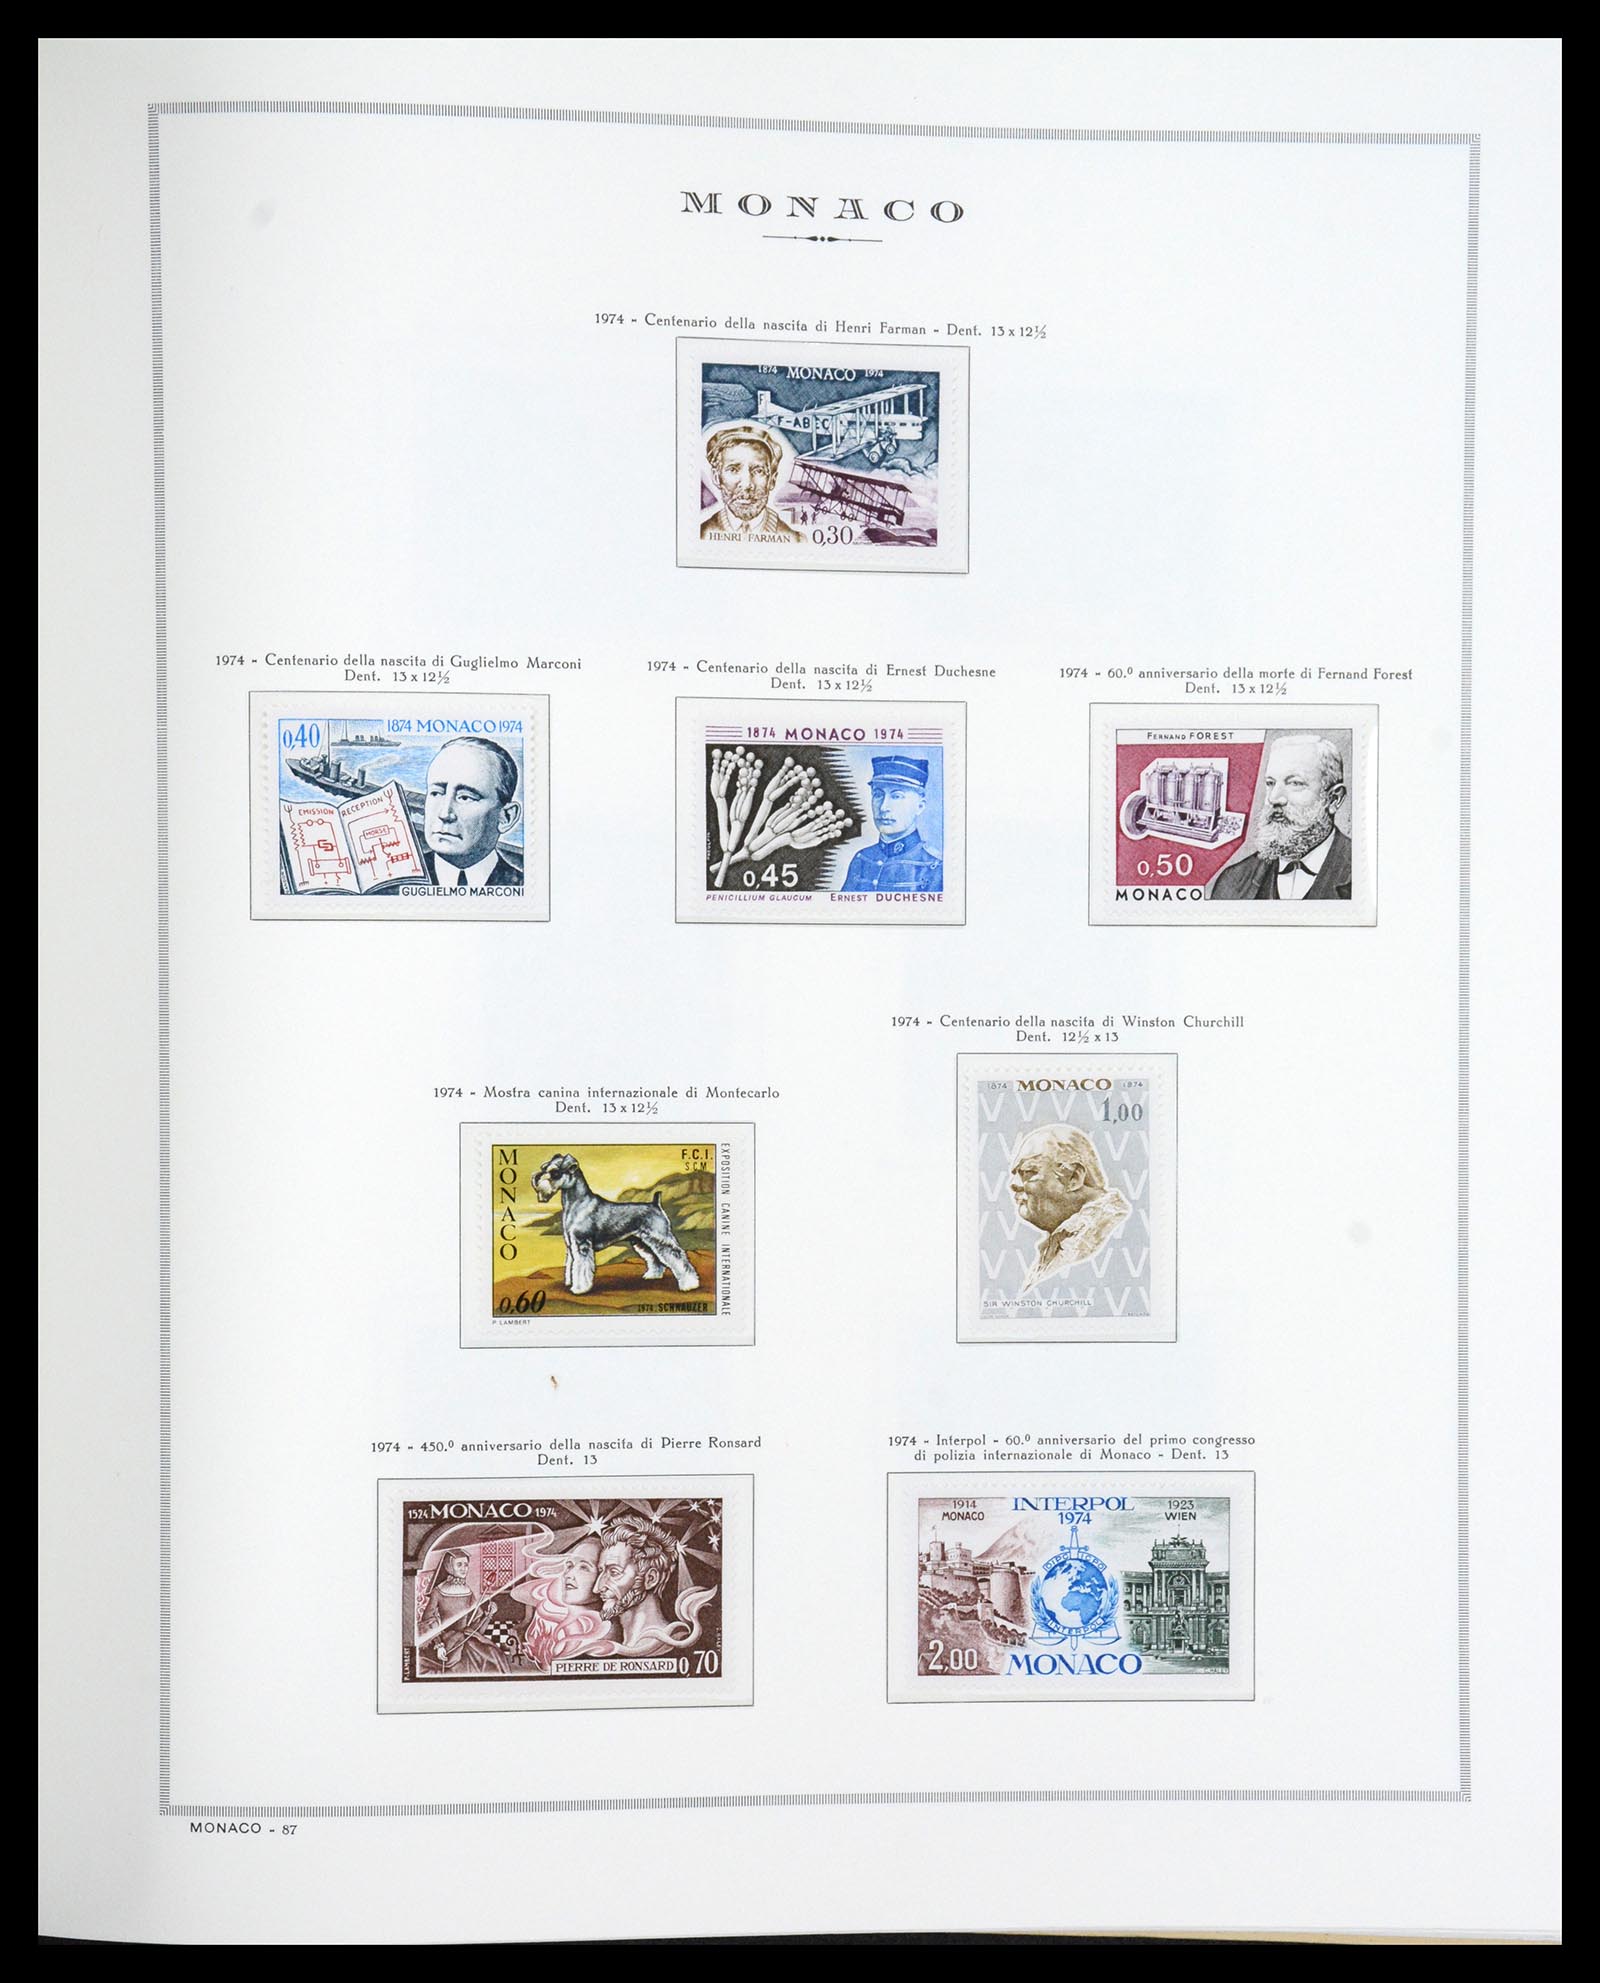 36631 076 - Stamp collection 36631 Monaco 1885-1980.